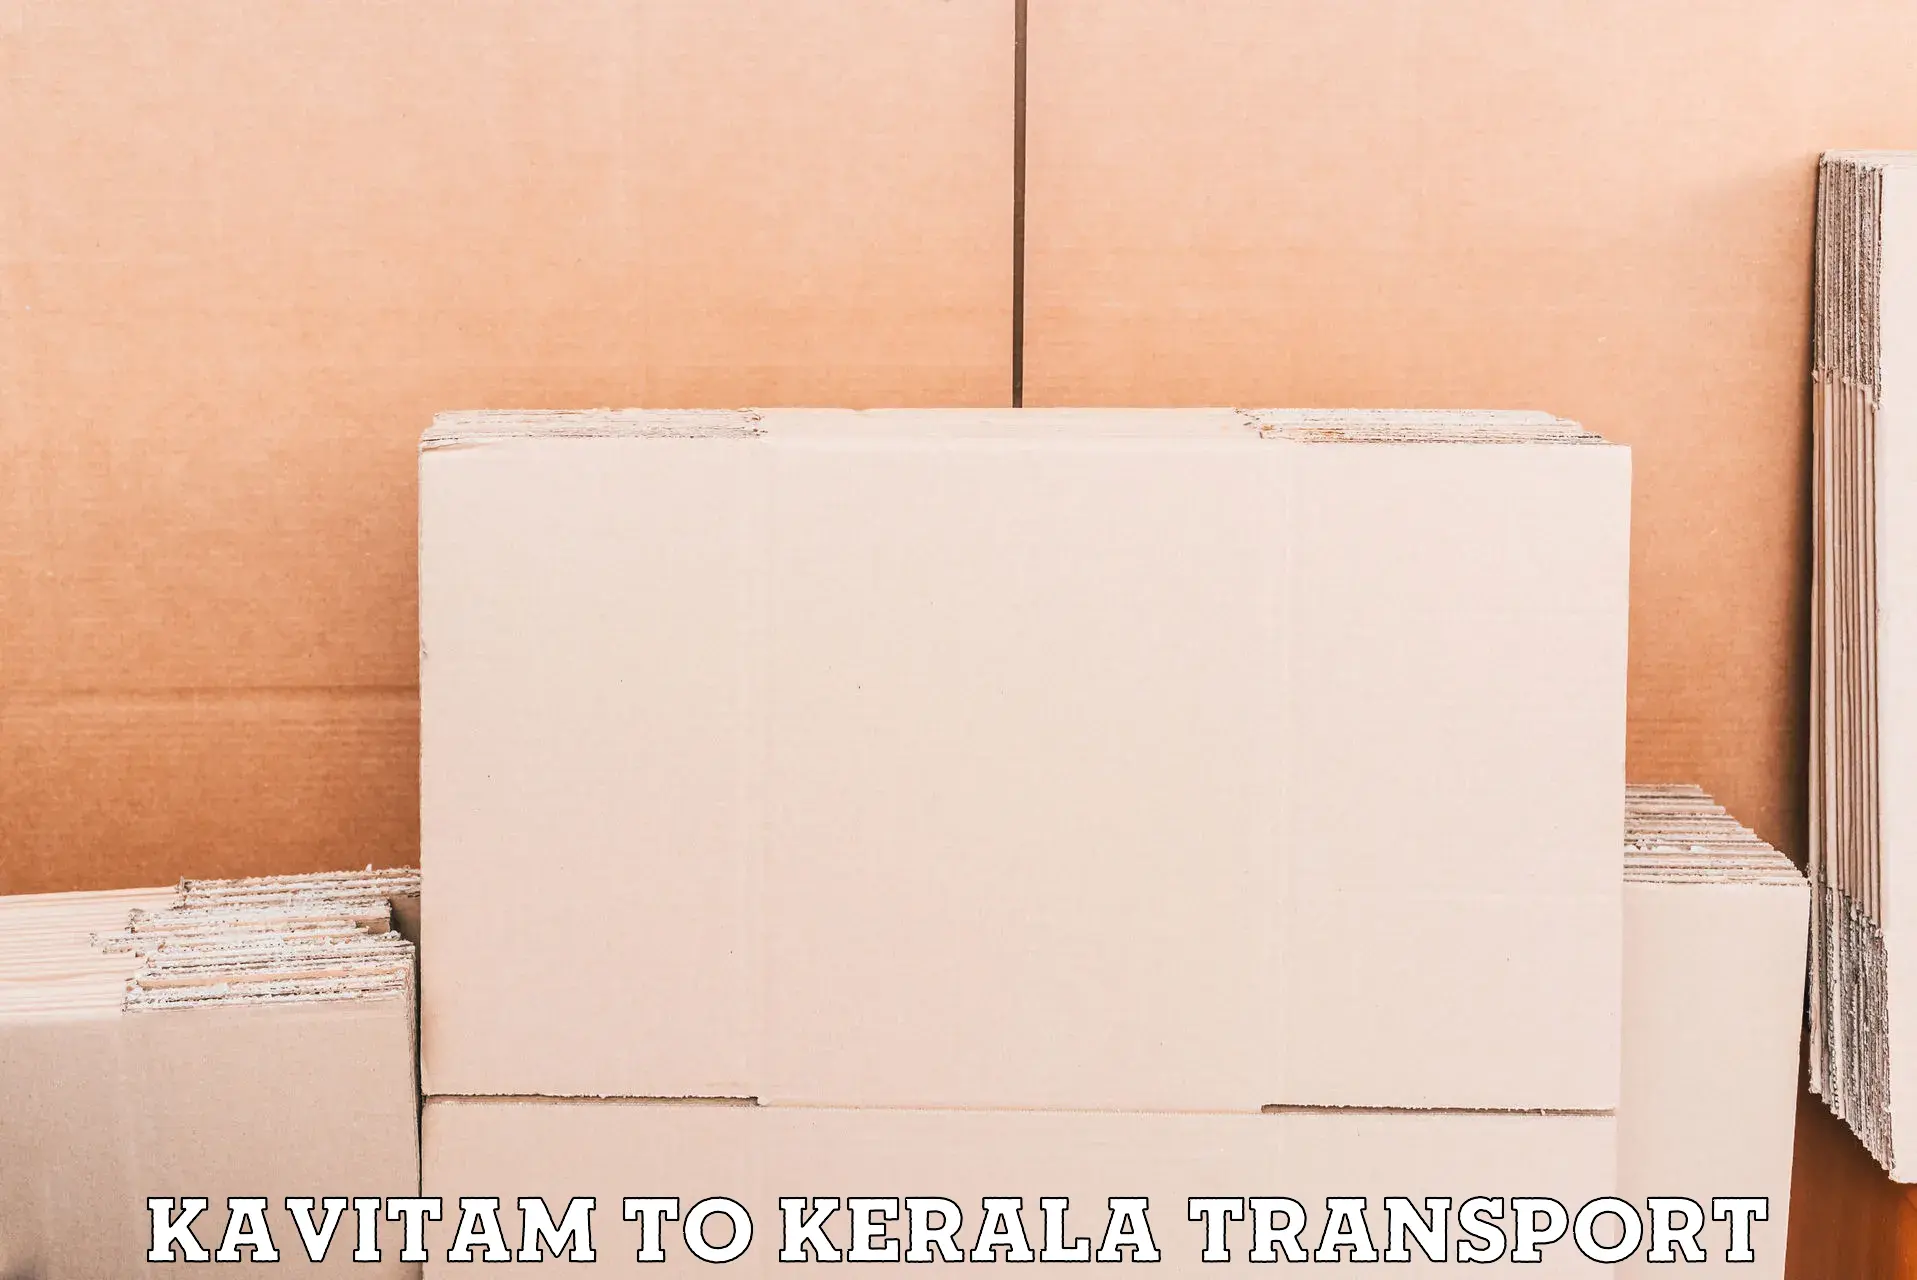 Transport in sharing in Kavitam to Kerala